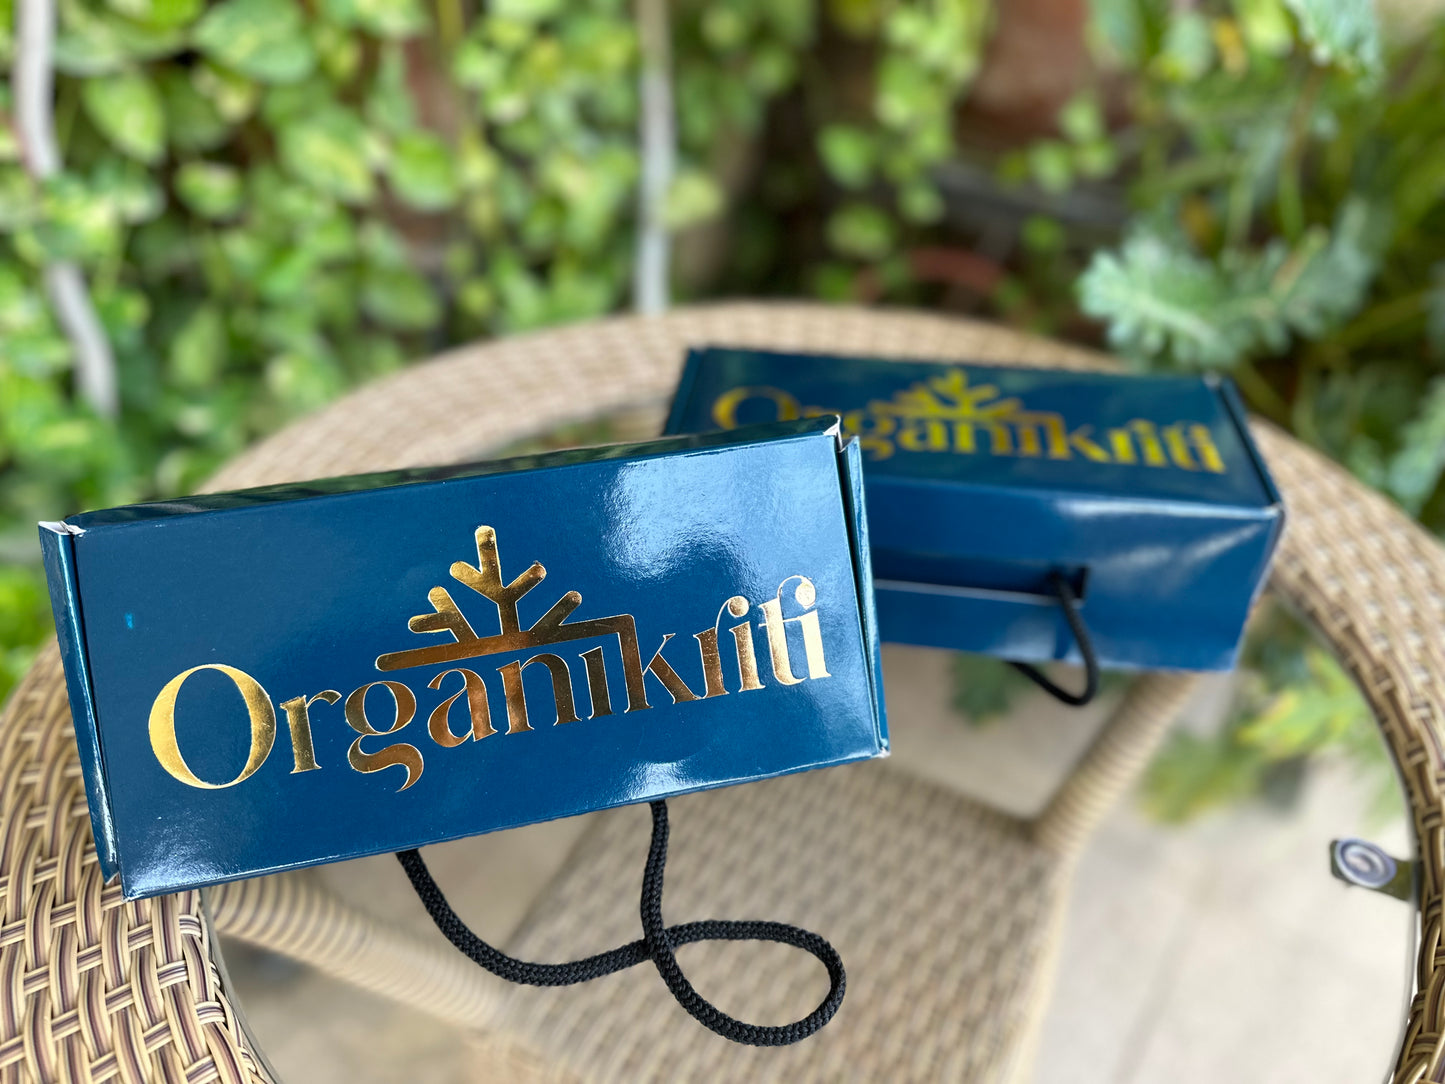 Organikriti Gift pack - Organic Elaichi (50 gms), Cloves (100 gms) and Black pepper (50 gms)